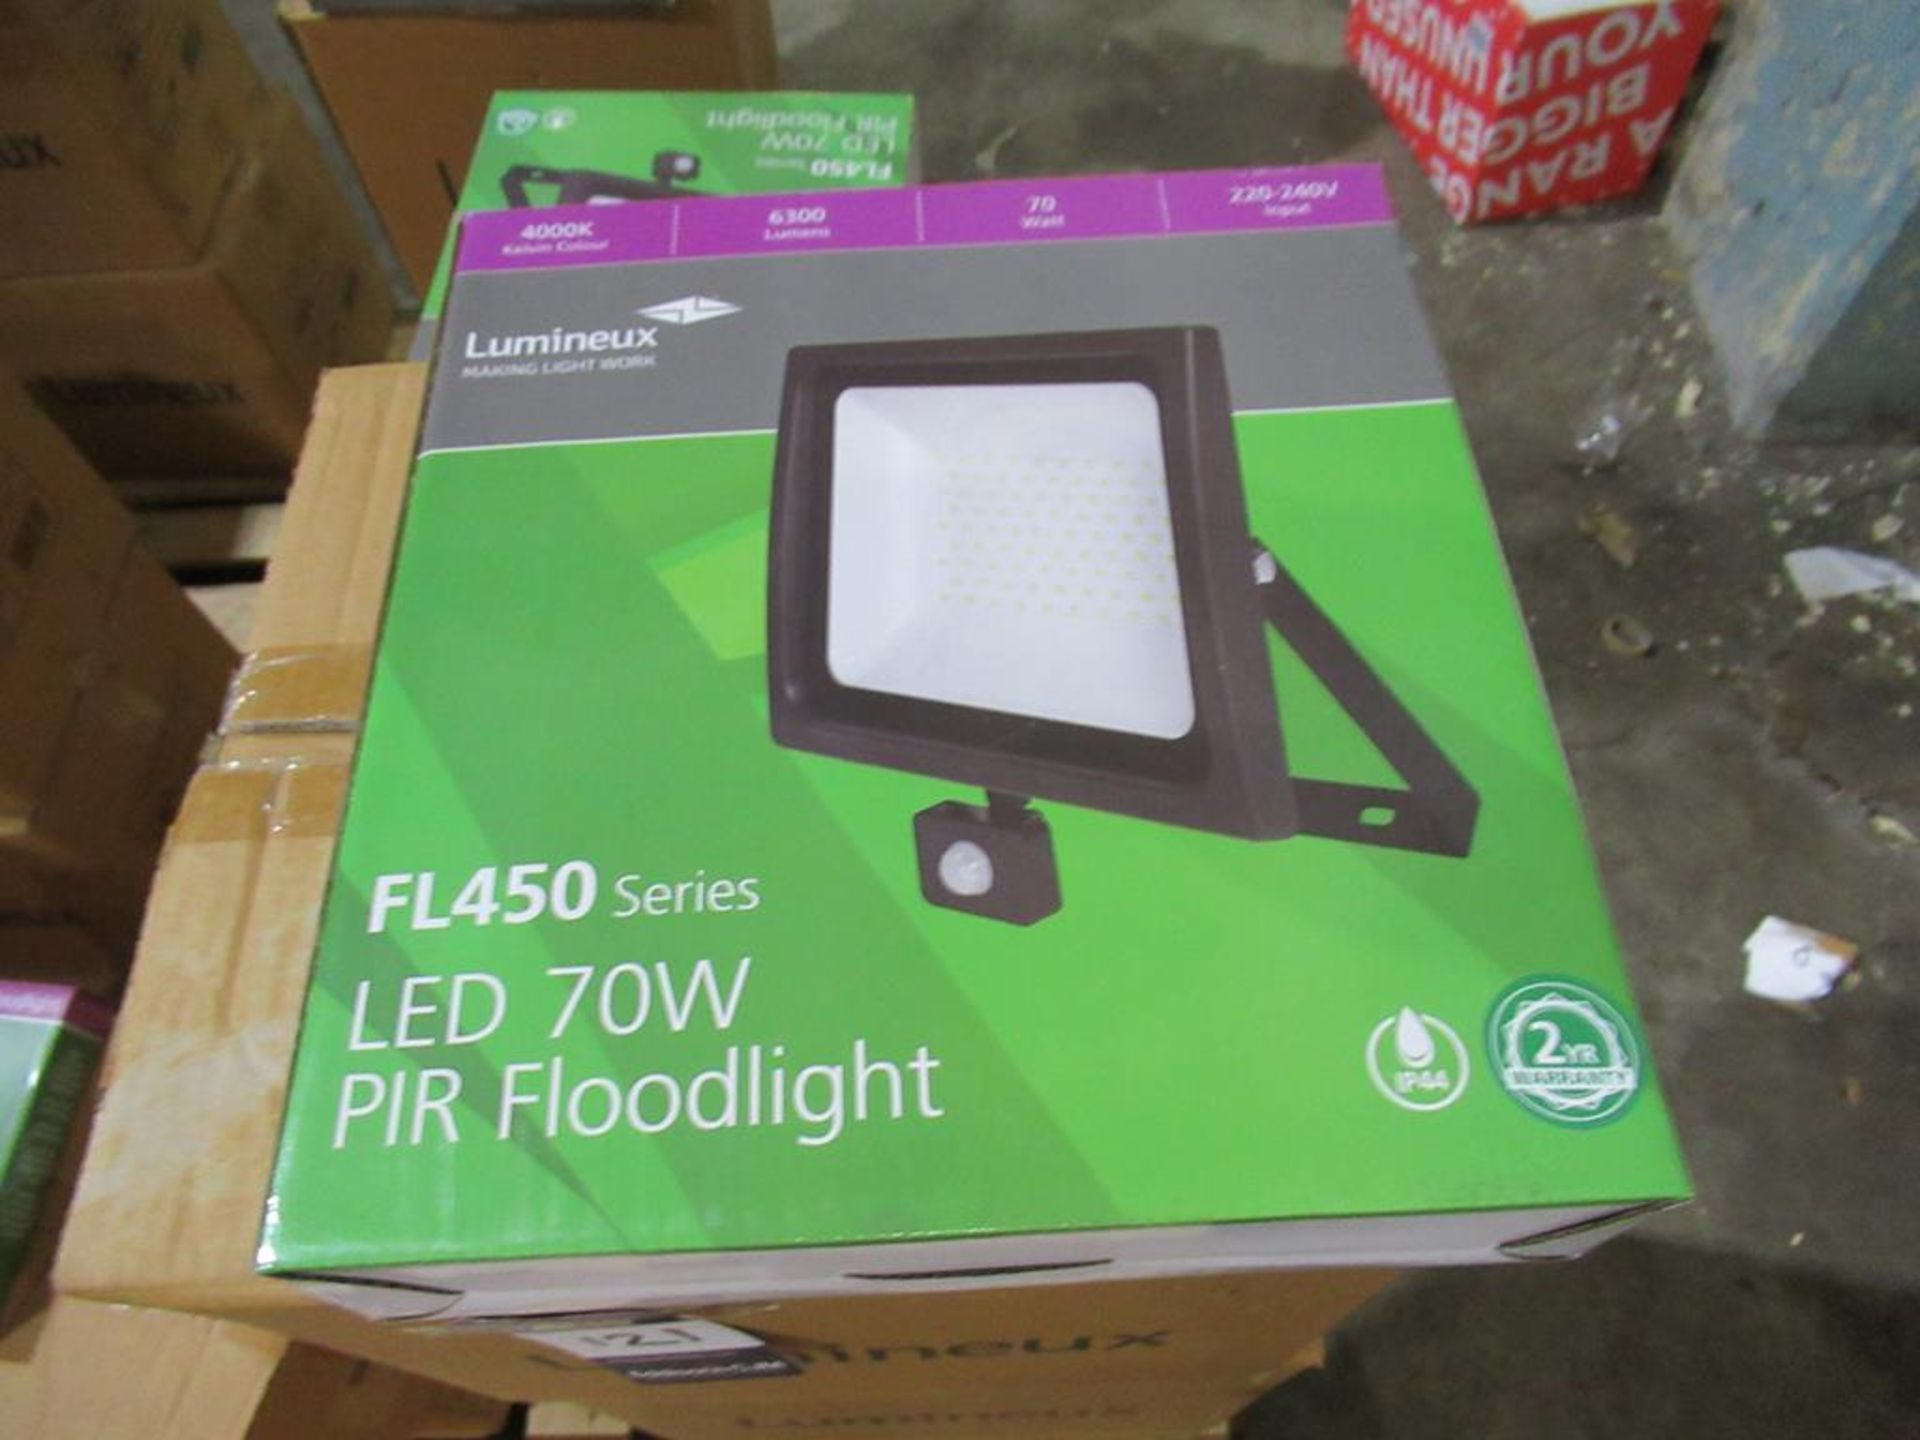 15 x LED 70W PIR Floodlight 4000K 220-240V OEM Trade Price £ 1050 - Image 3 of 3